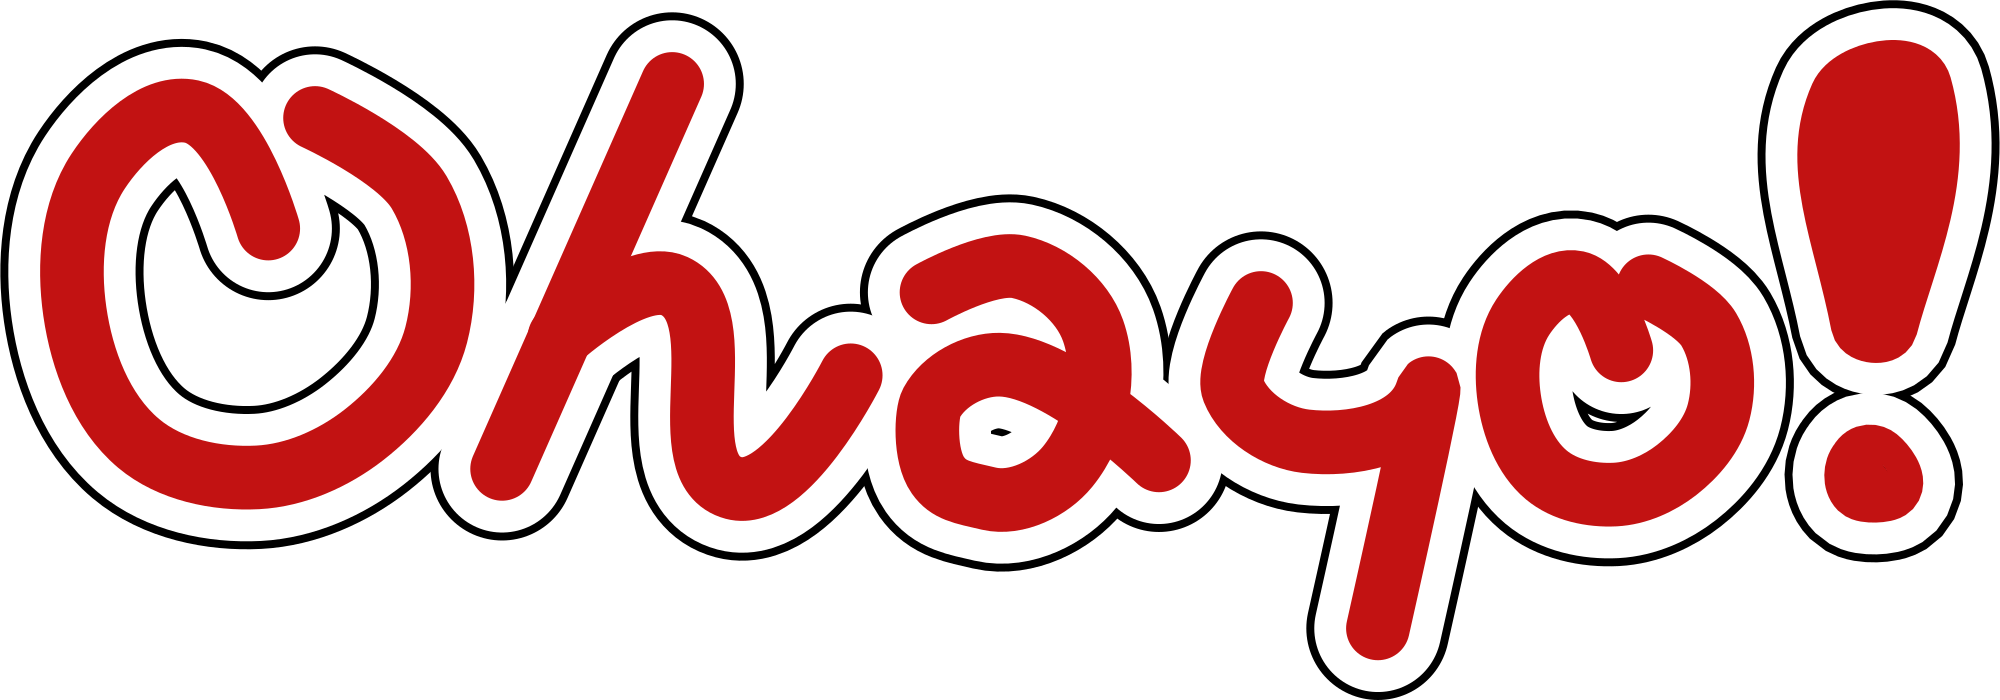 Ohayo (logo)